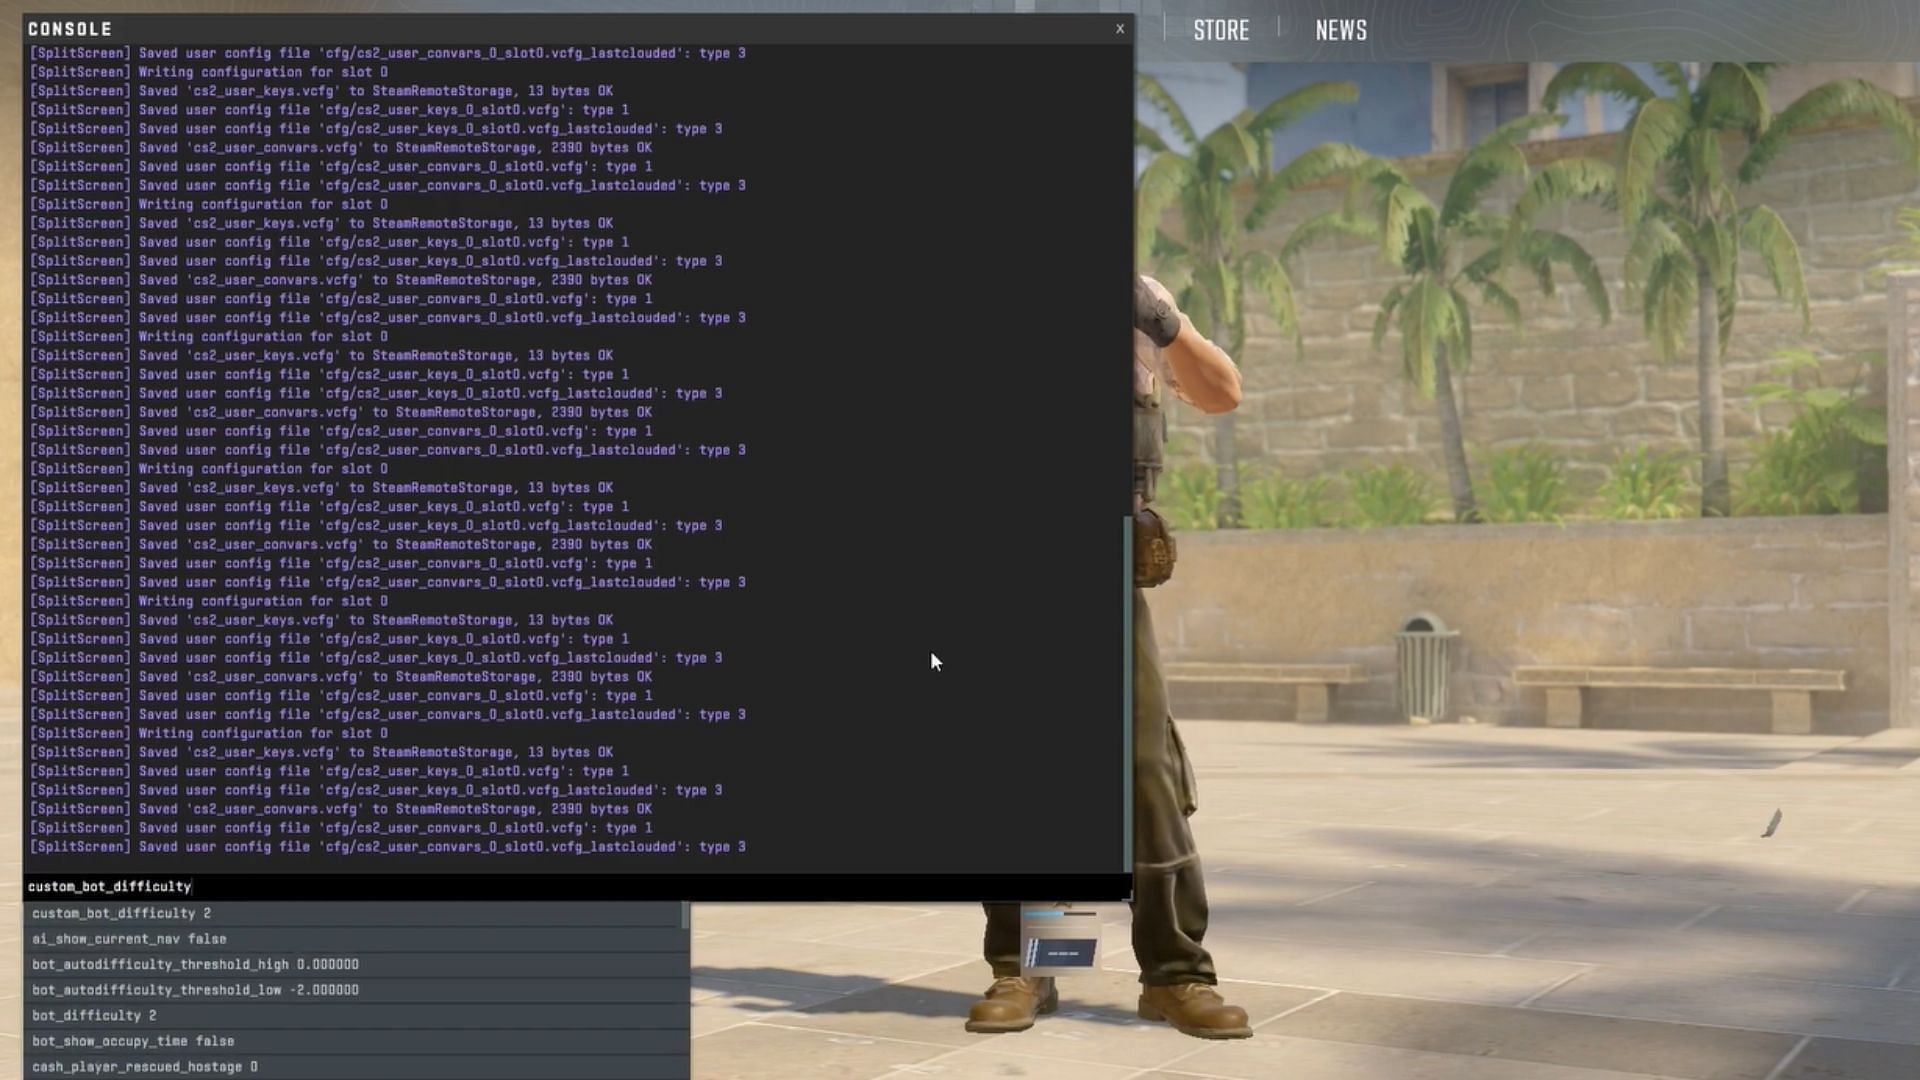 The custom_bot_difficulty command in CS2 (Image via YouTube/@romzonpc)